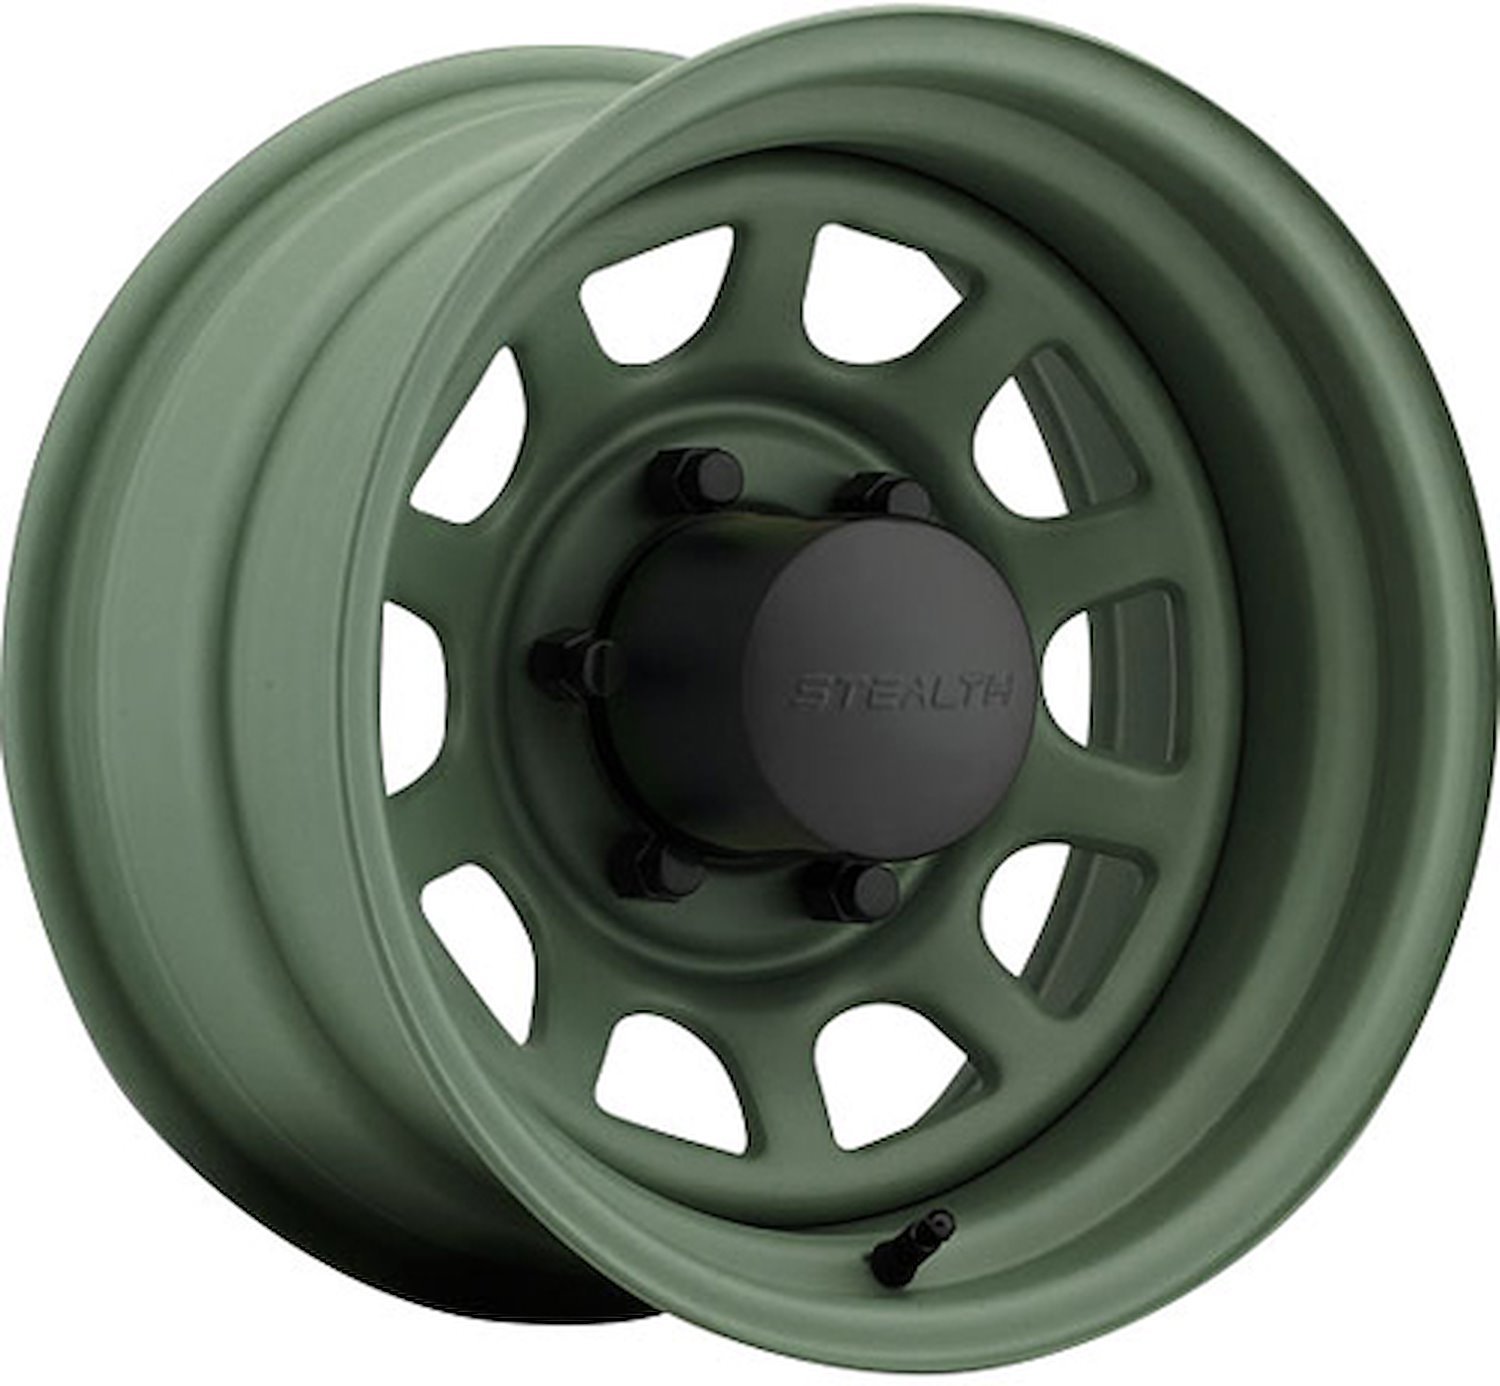 Stealth Camo Green Daytona Wheel (Series 804) Size: 16" x 10"